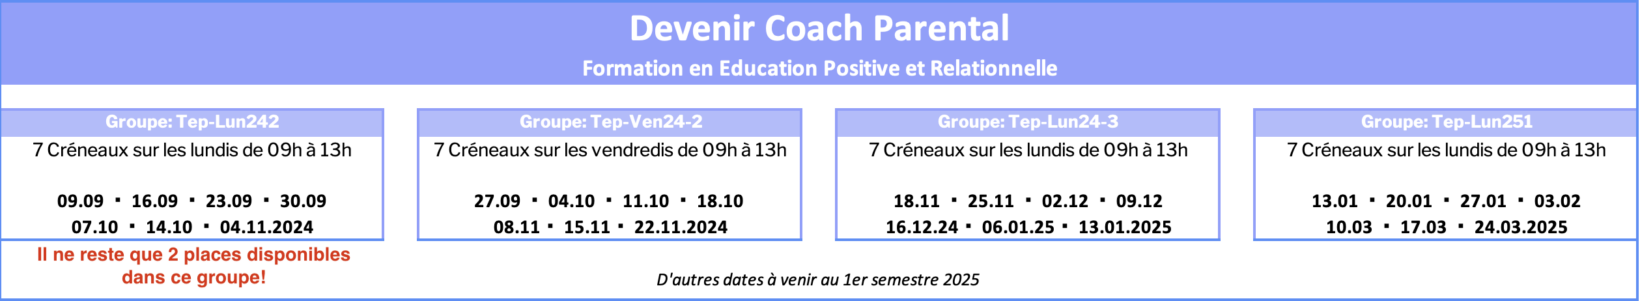 planning coach parental 24 25